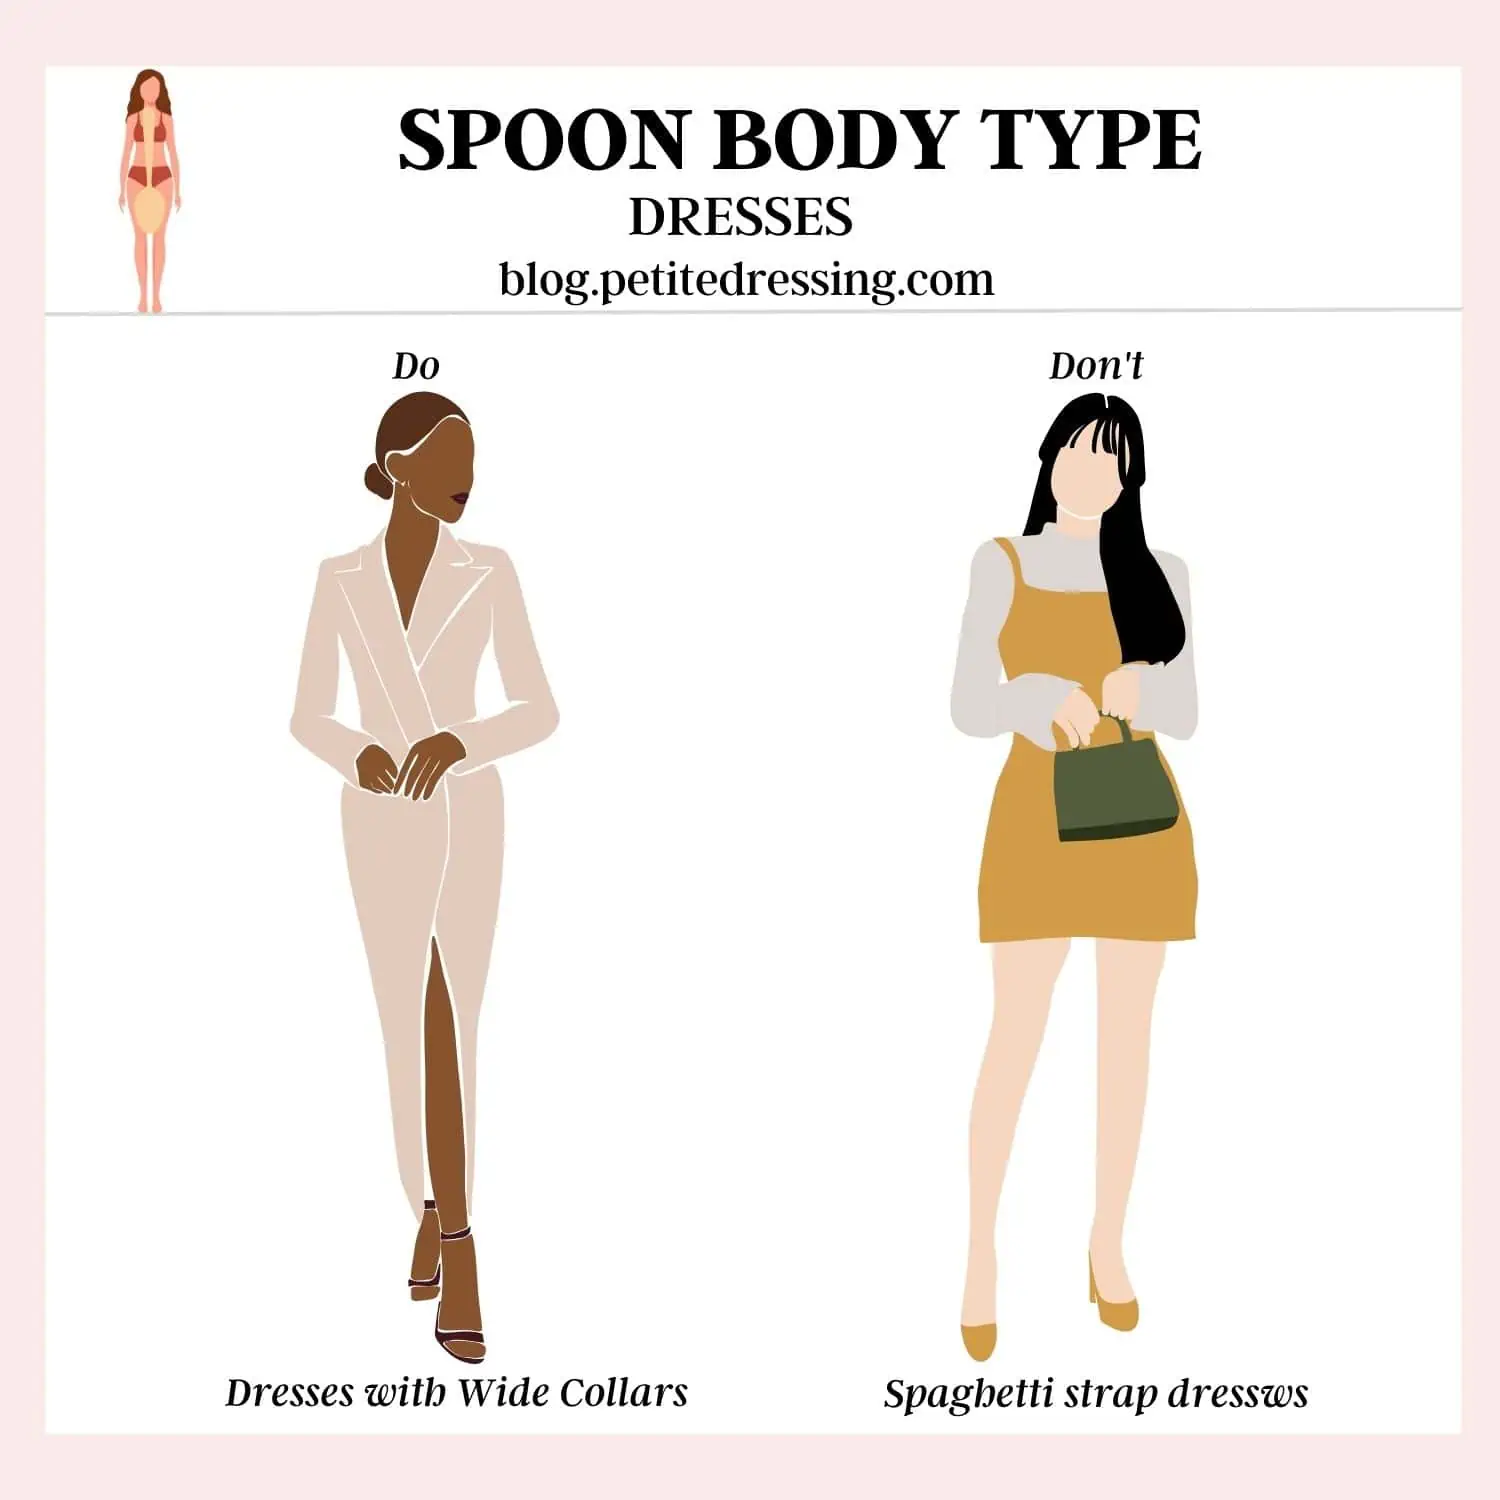 Pear Body Shape: A Comprehensive Guide, the concept wardrobe